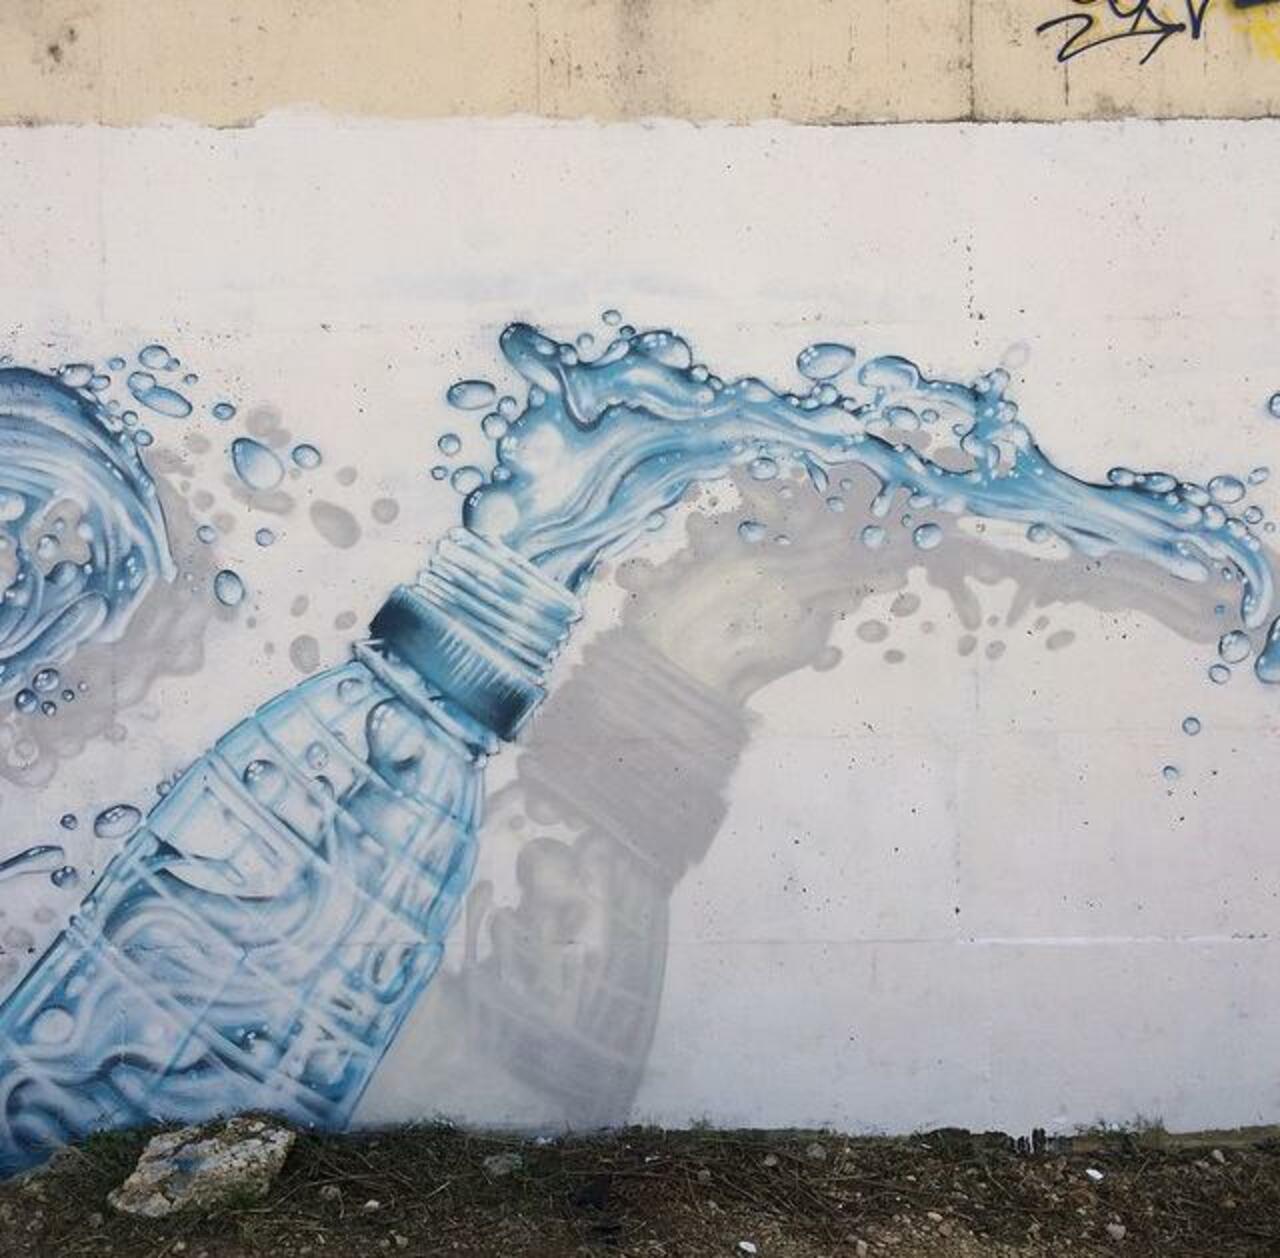 'Bottle'
Class new Street Art by JeazeOner 

#art #arte #graffiti #streetart http://t.co/PKNKF7KVbk